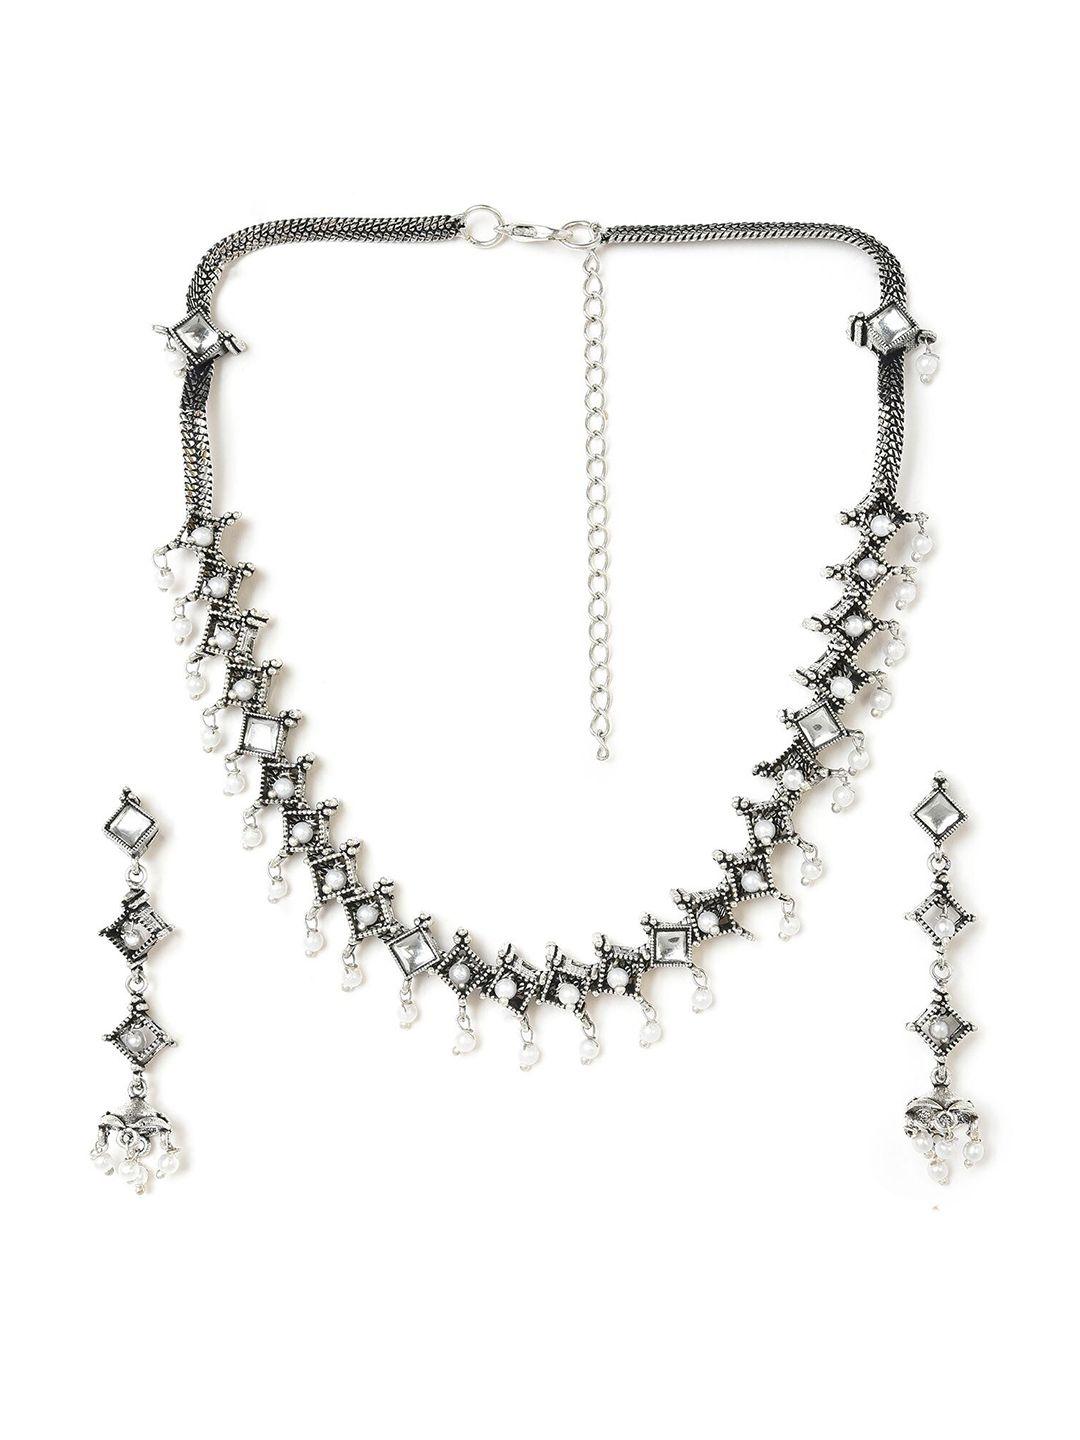 w oxidized silver-toned & white stone-studded & beaded jewellery set